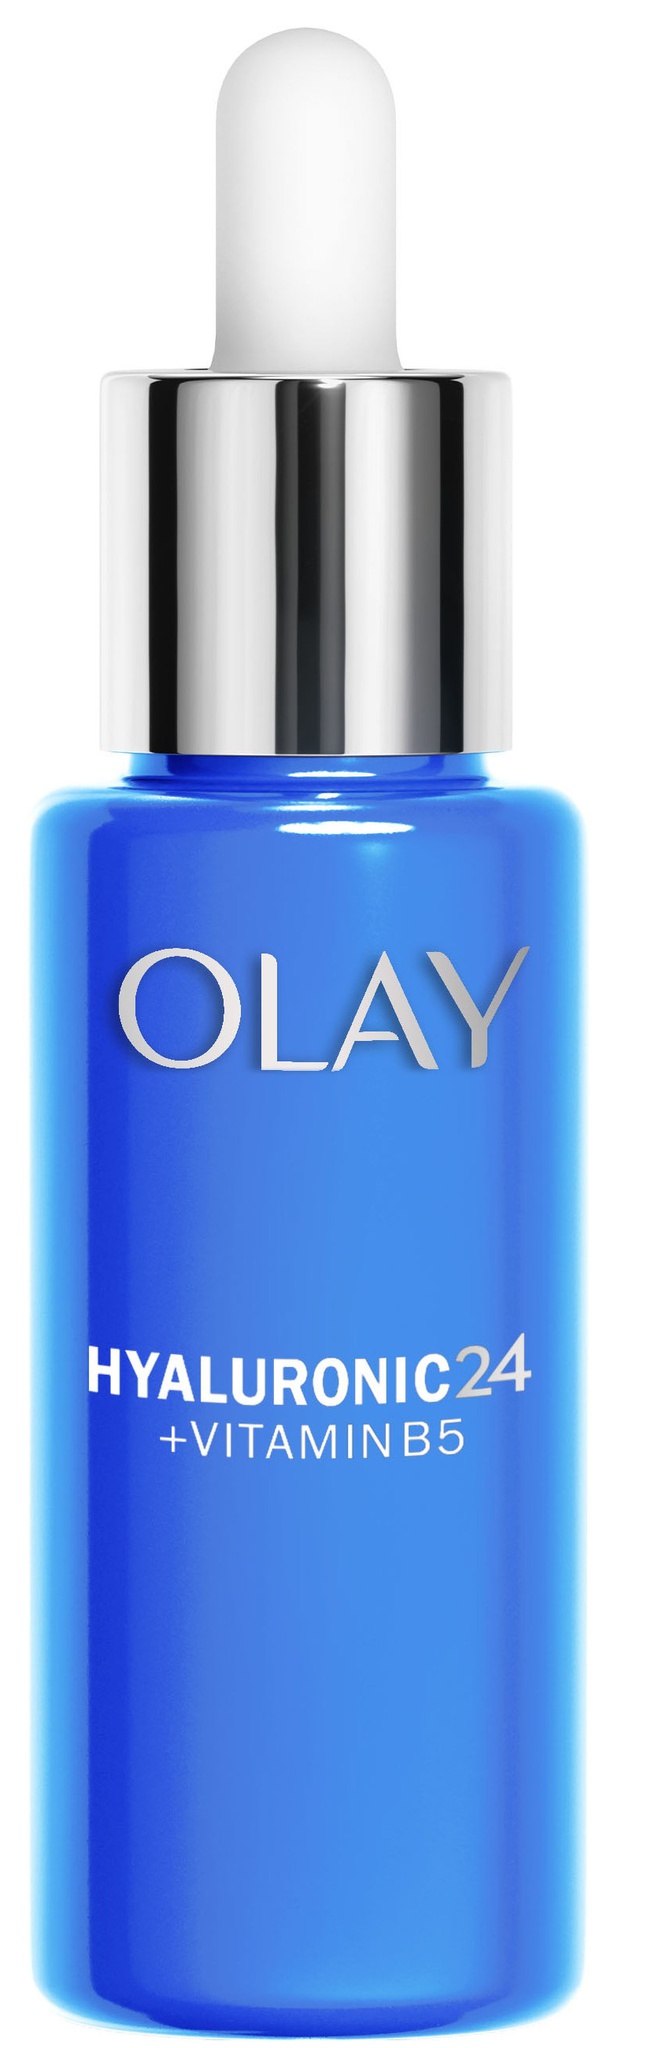 Olay Hyaluronic24 + Vitamin B5 Ultra Hydrating Dagserum